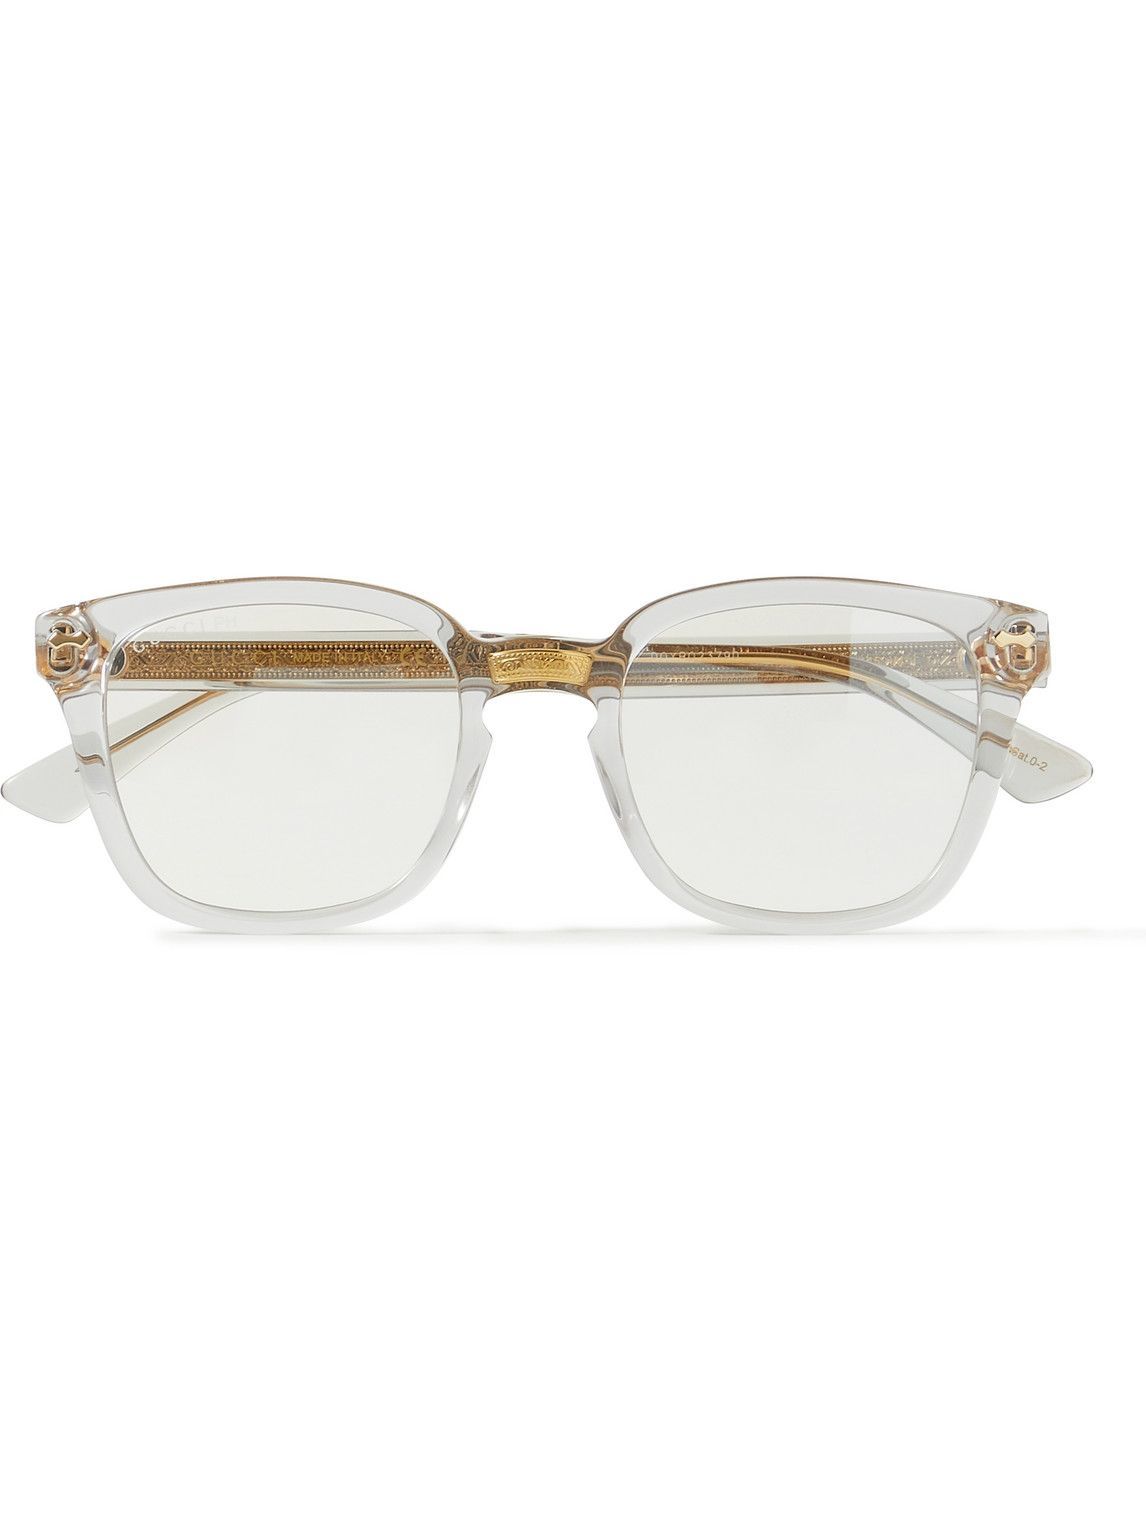 Gucci Eyewear - D-Frame Acetate and Gold-Tone Blue Light-Blocking Optical Glasses  Gucci